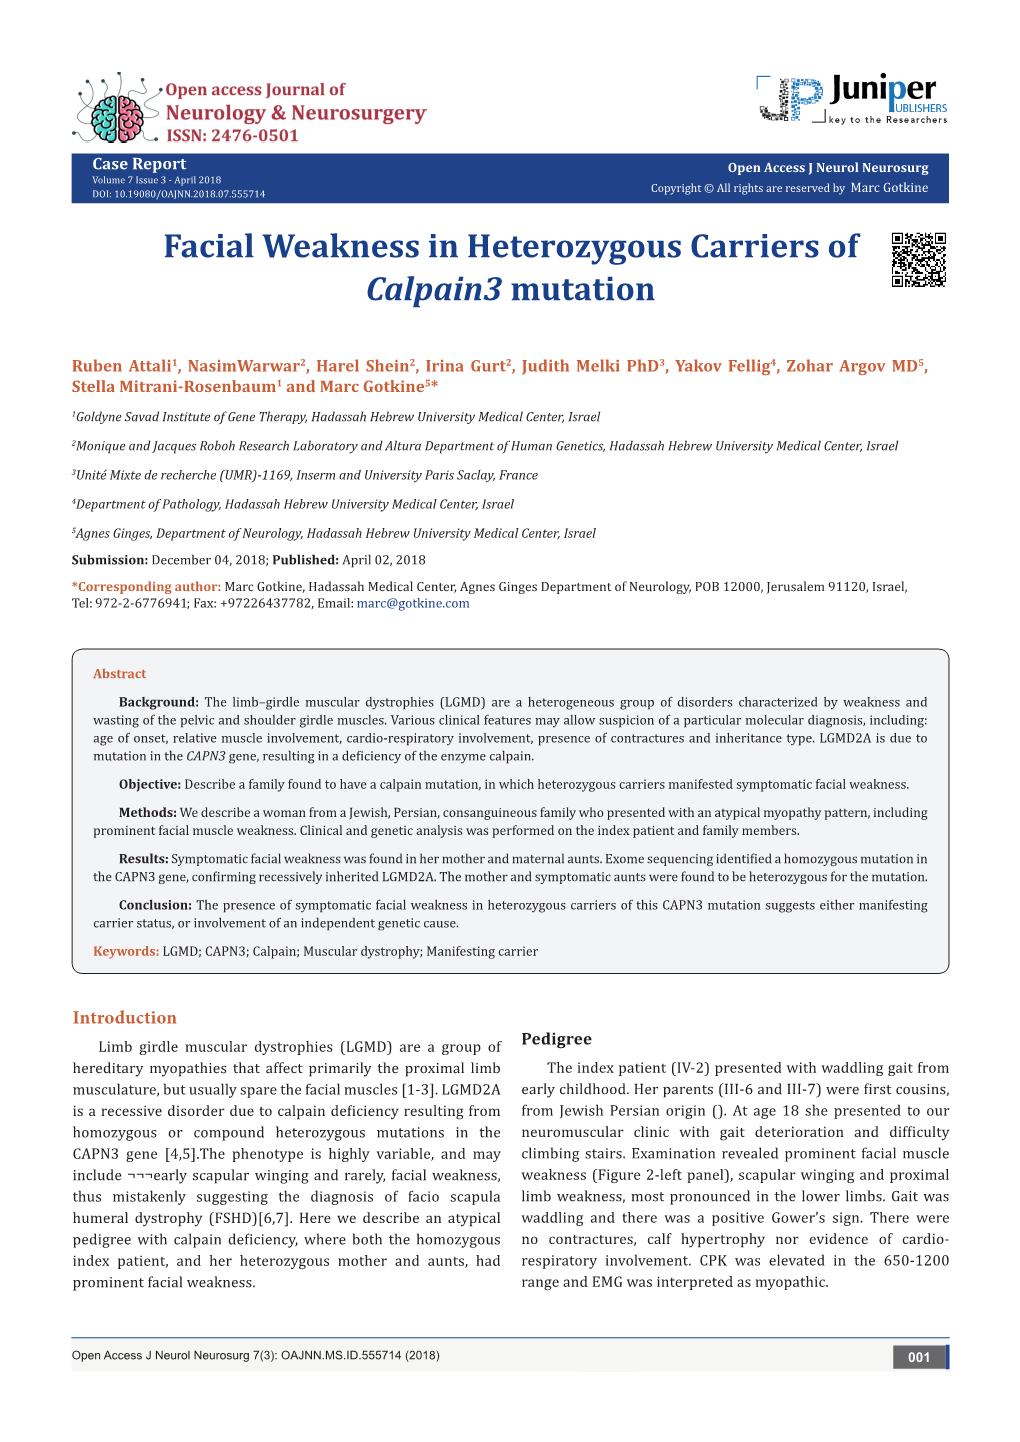 Facial Weakness in Heterozygous Carriers of Calpain3 Mutation